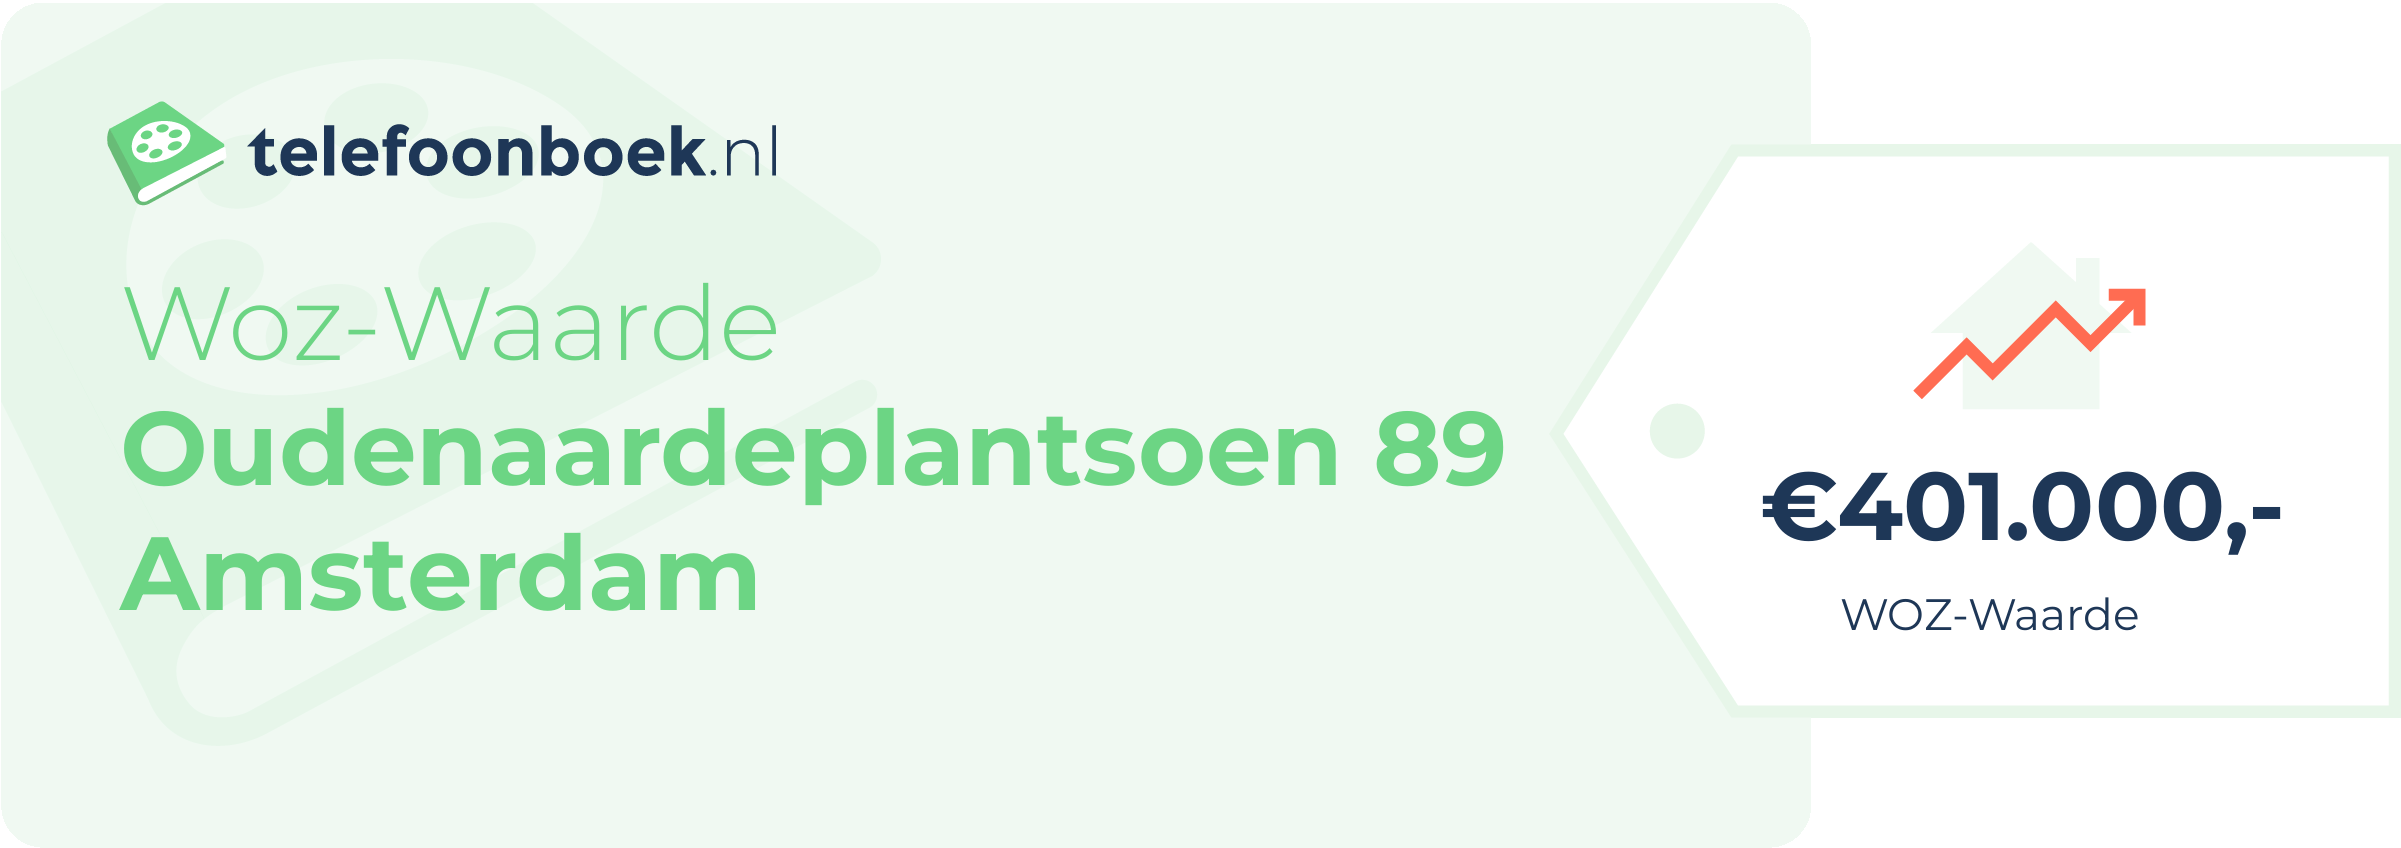 WOZ-waarde Oudenaardeplantsoen 89 Amsterdam